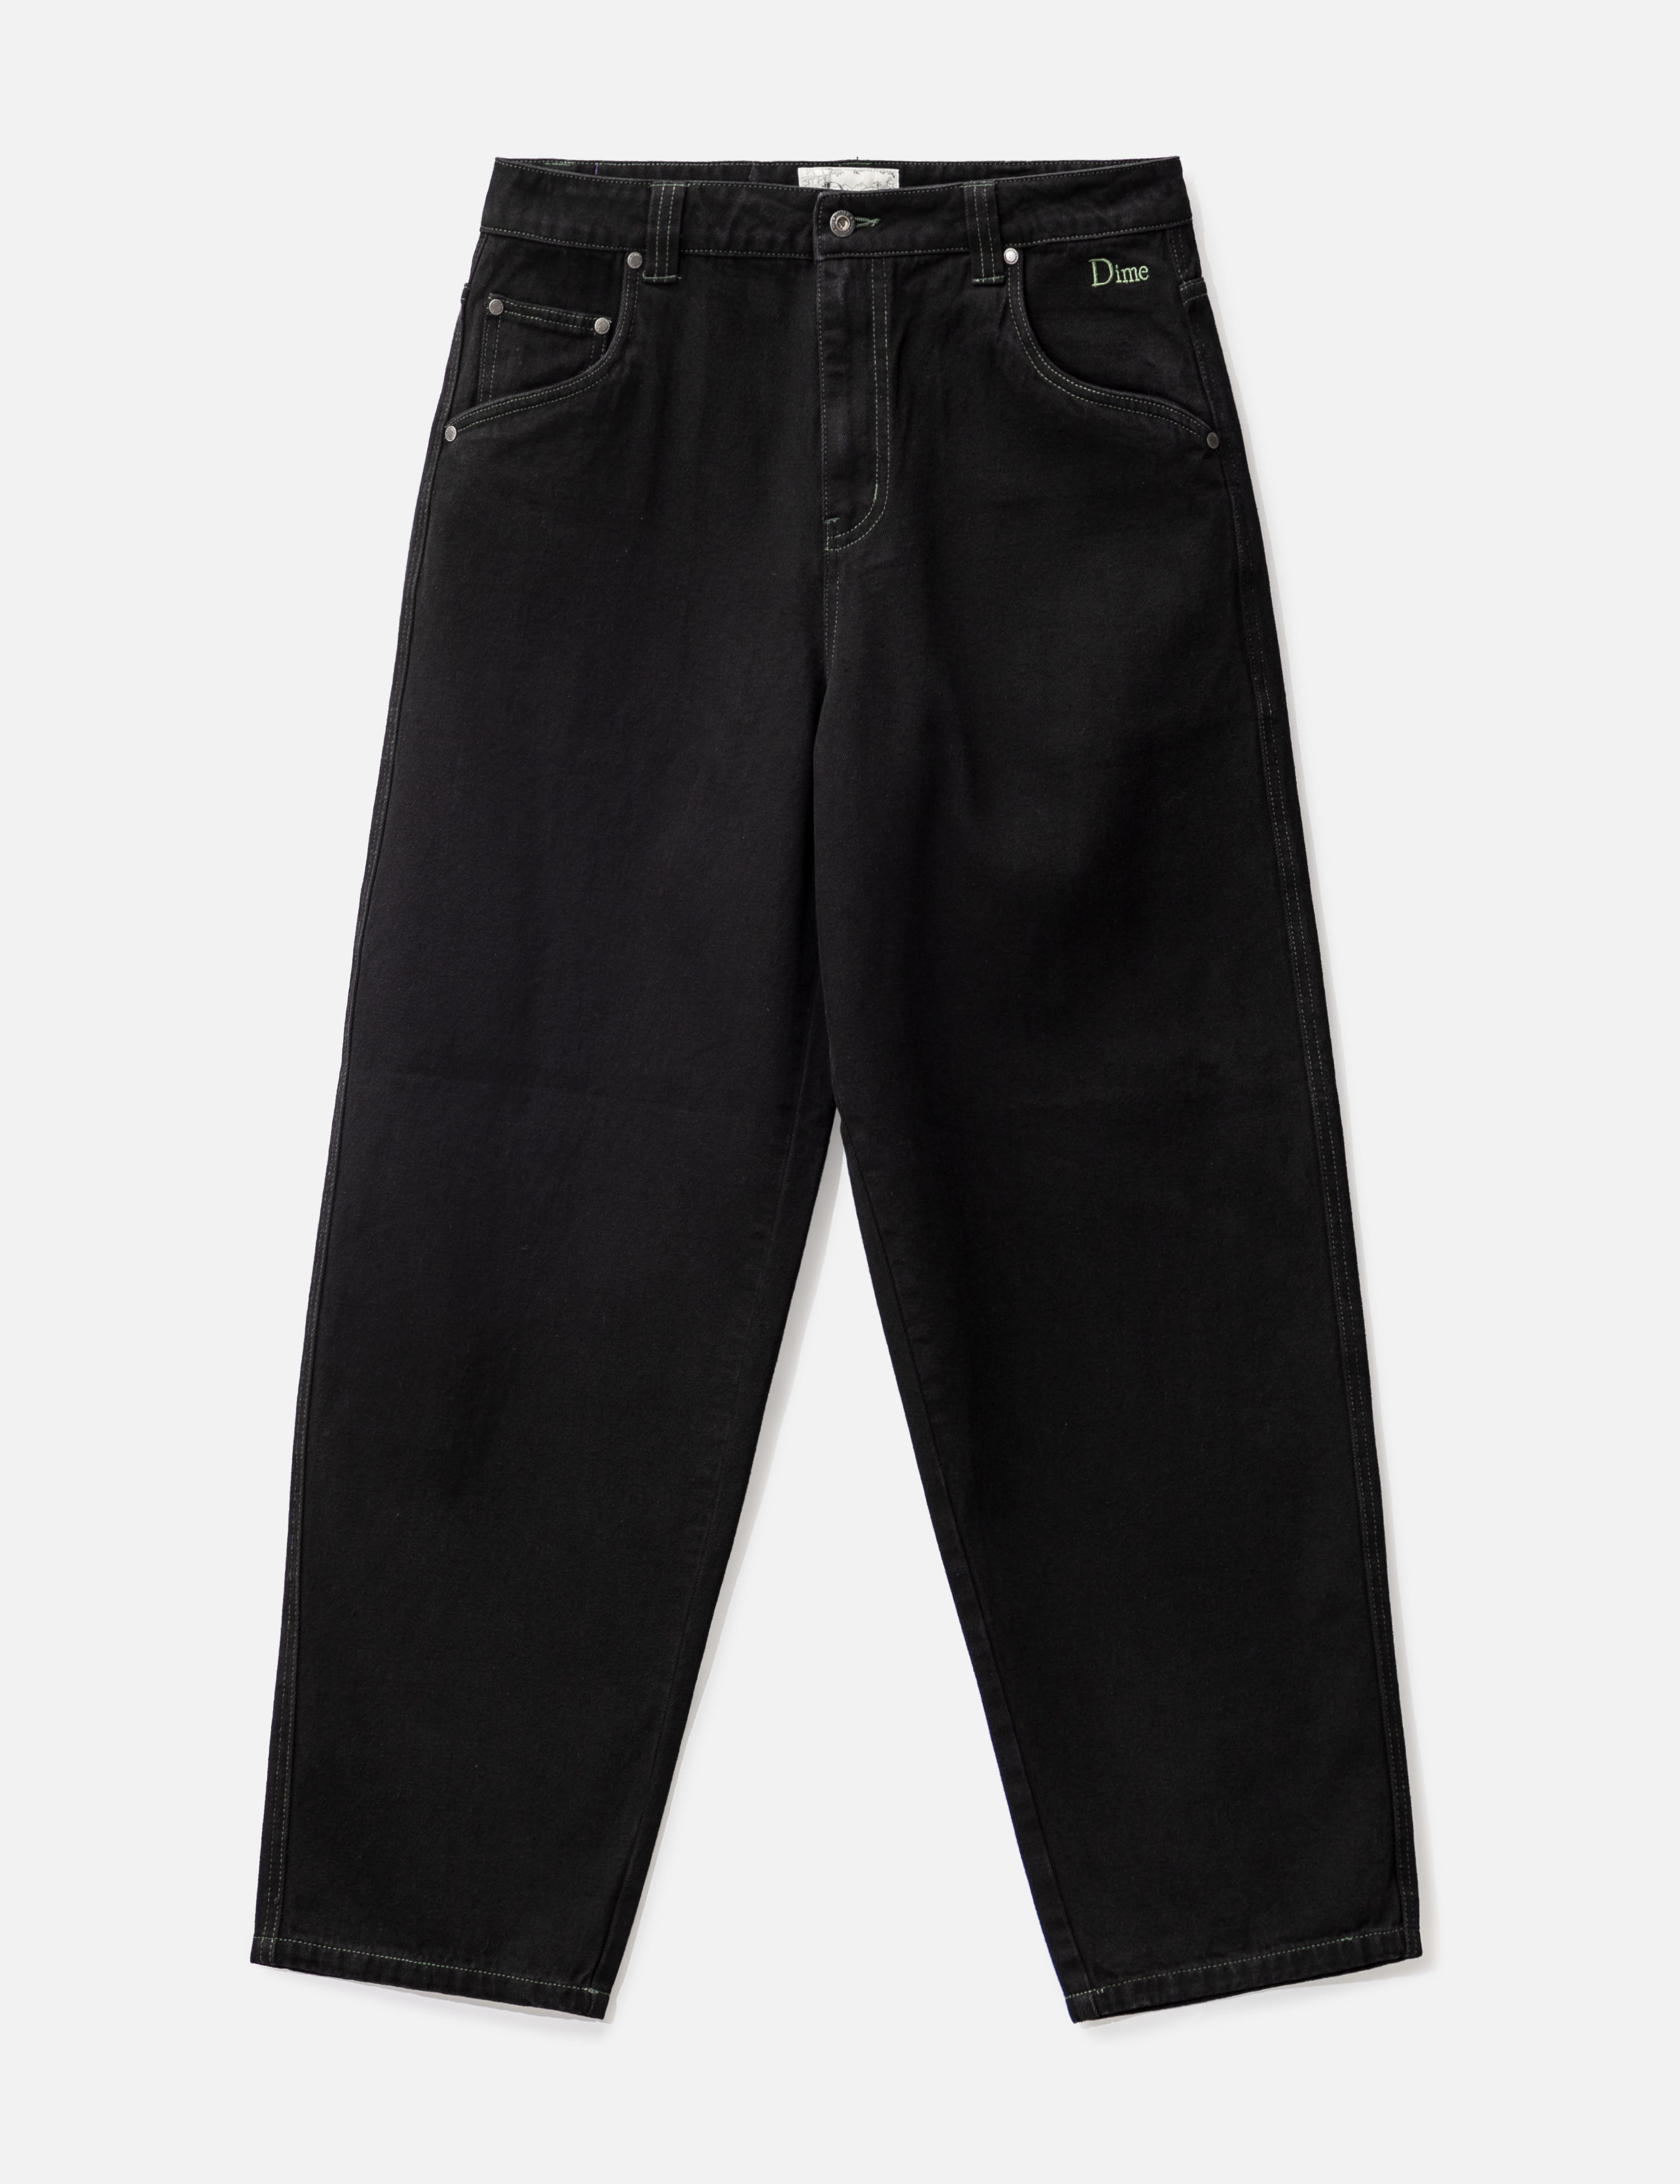 Denim - Black denim jeans | Fendi